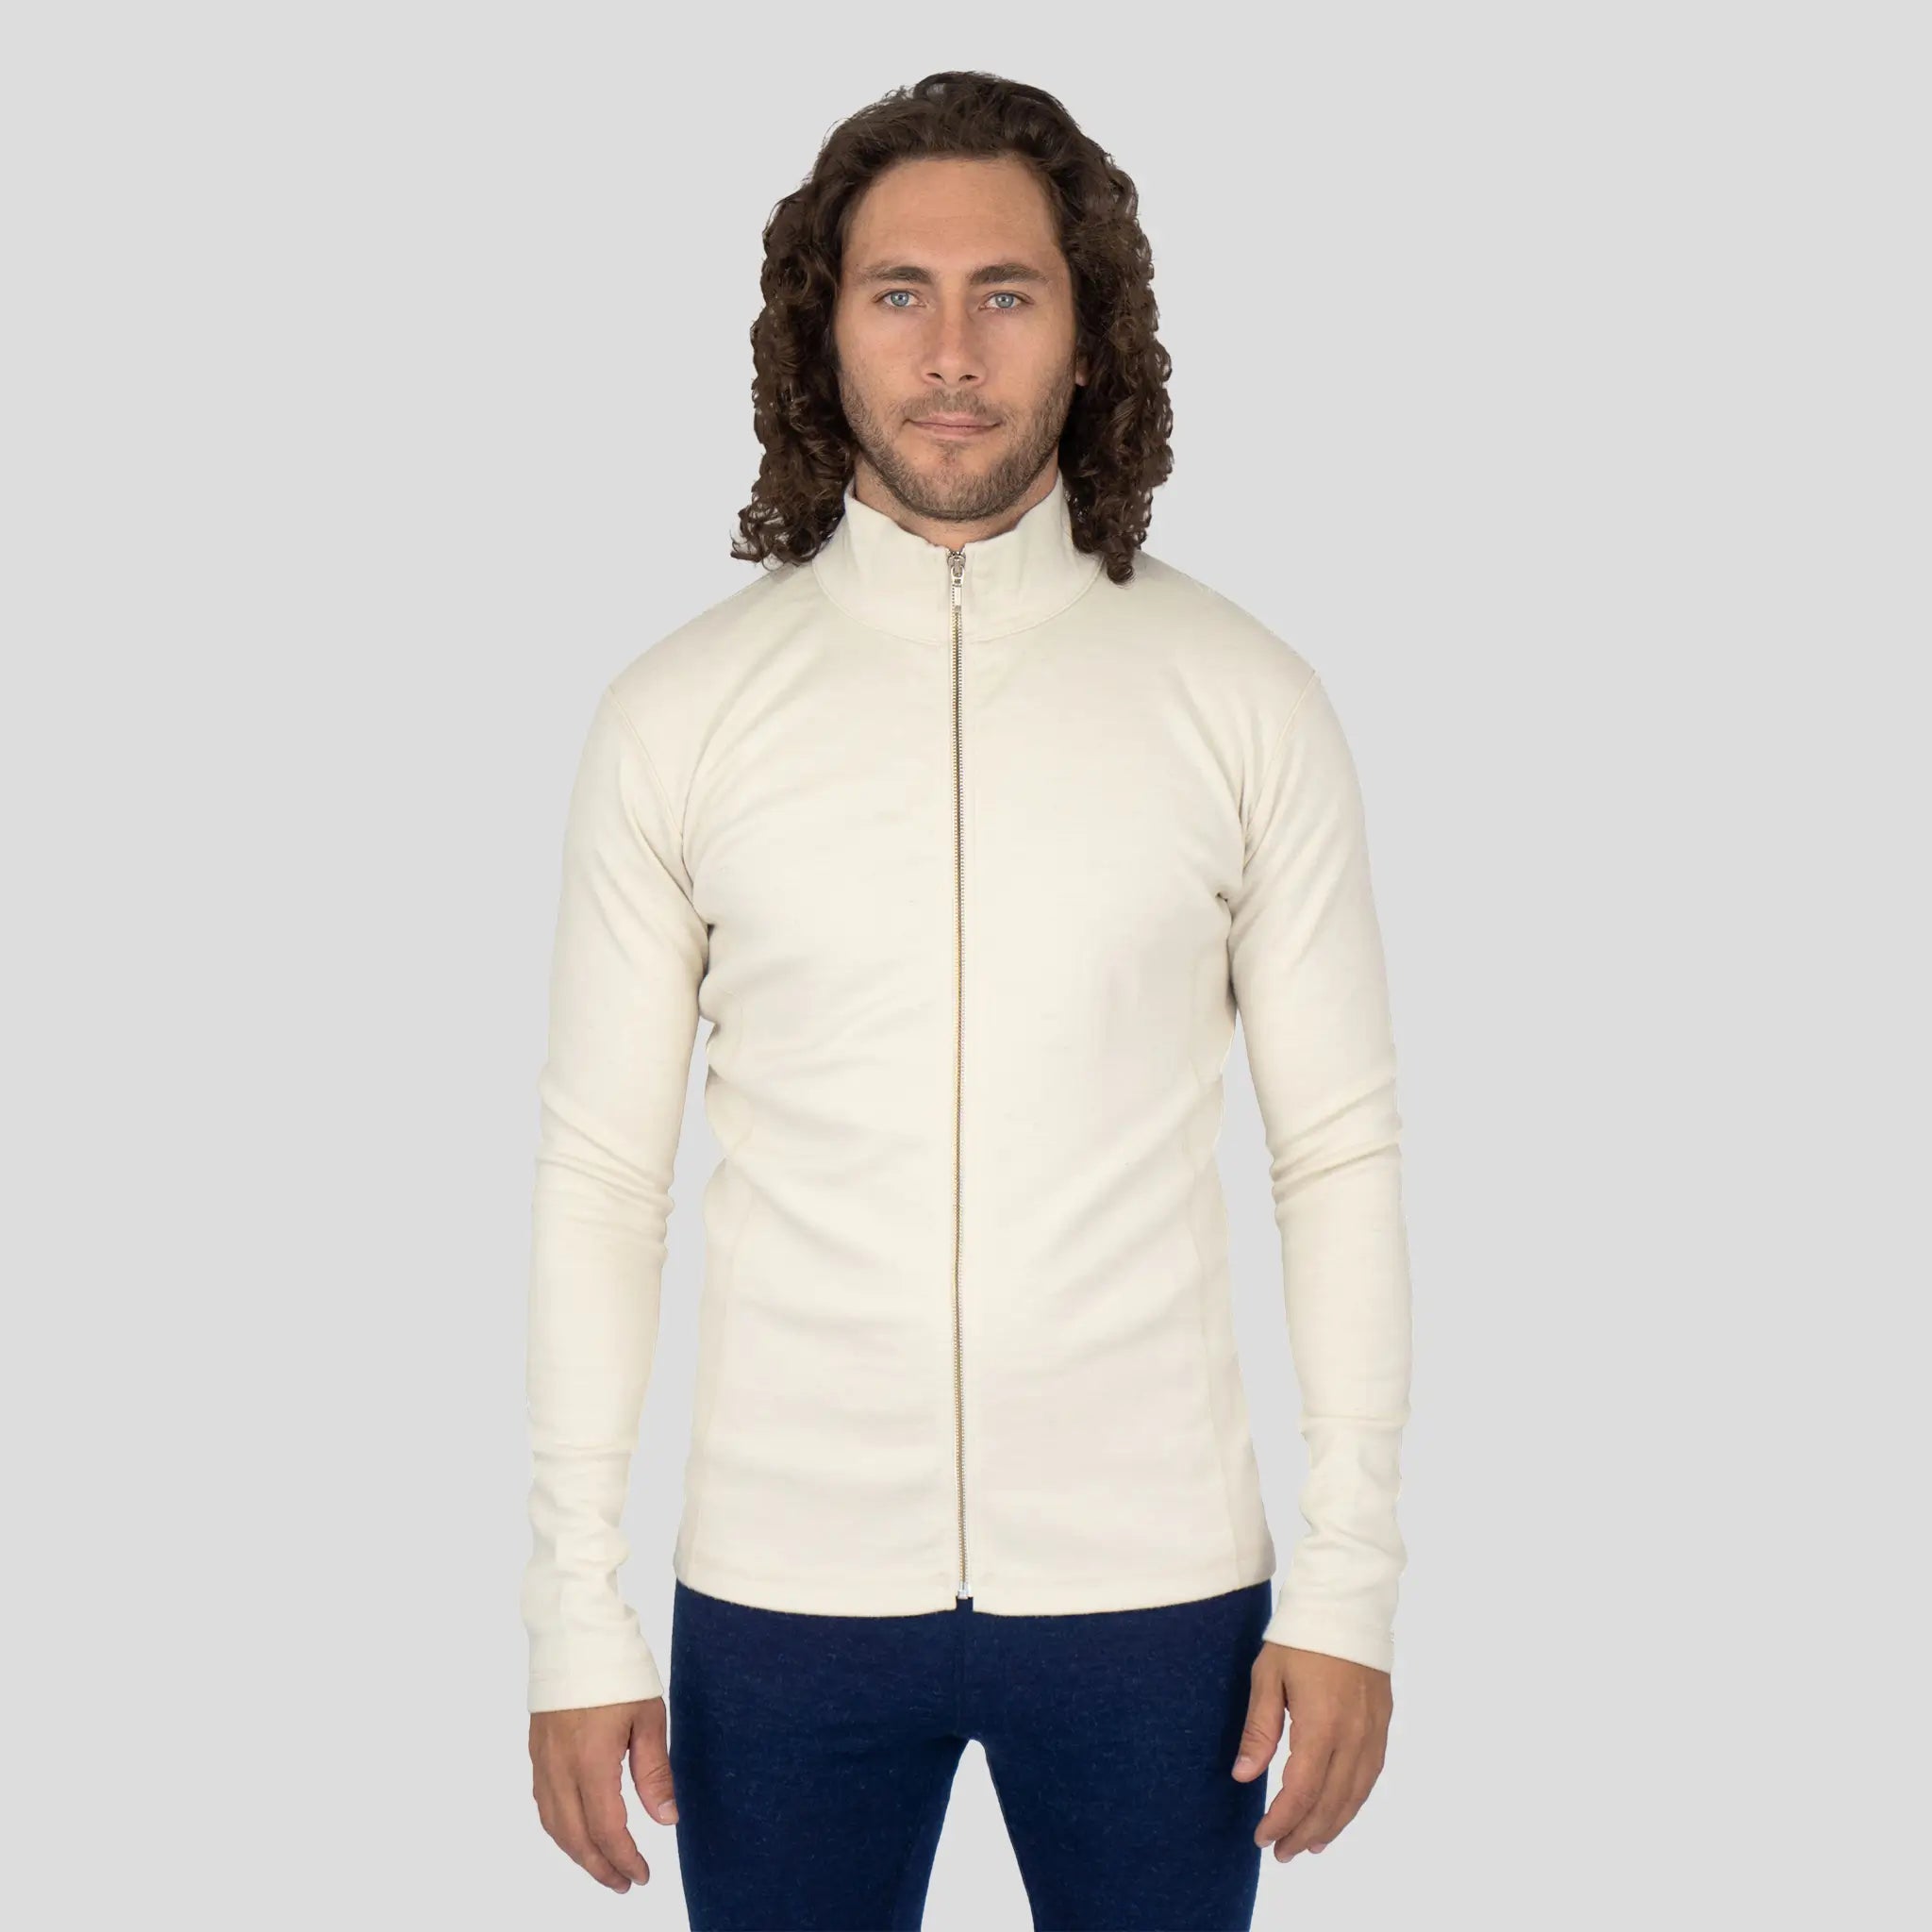 mens jacket color natural white